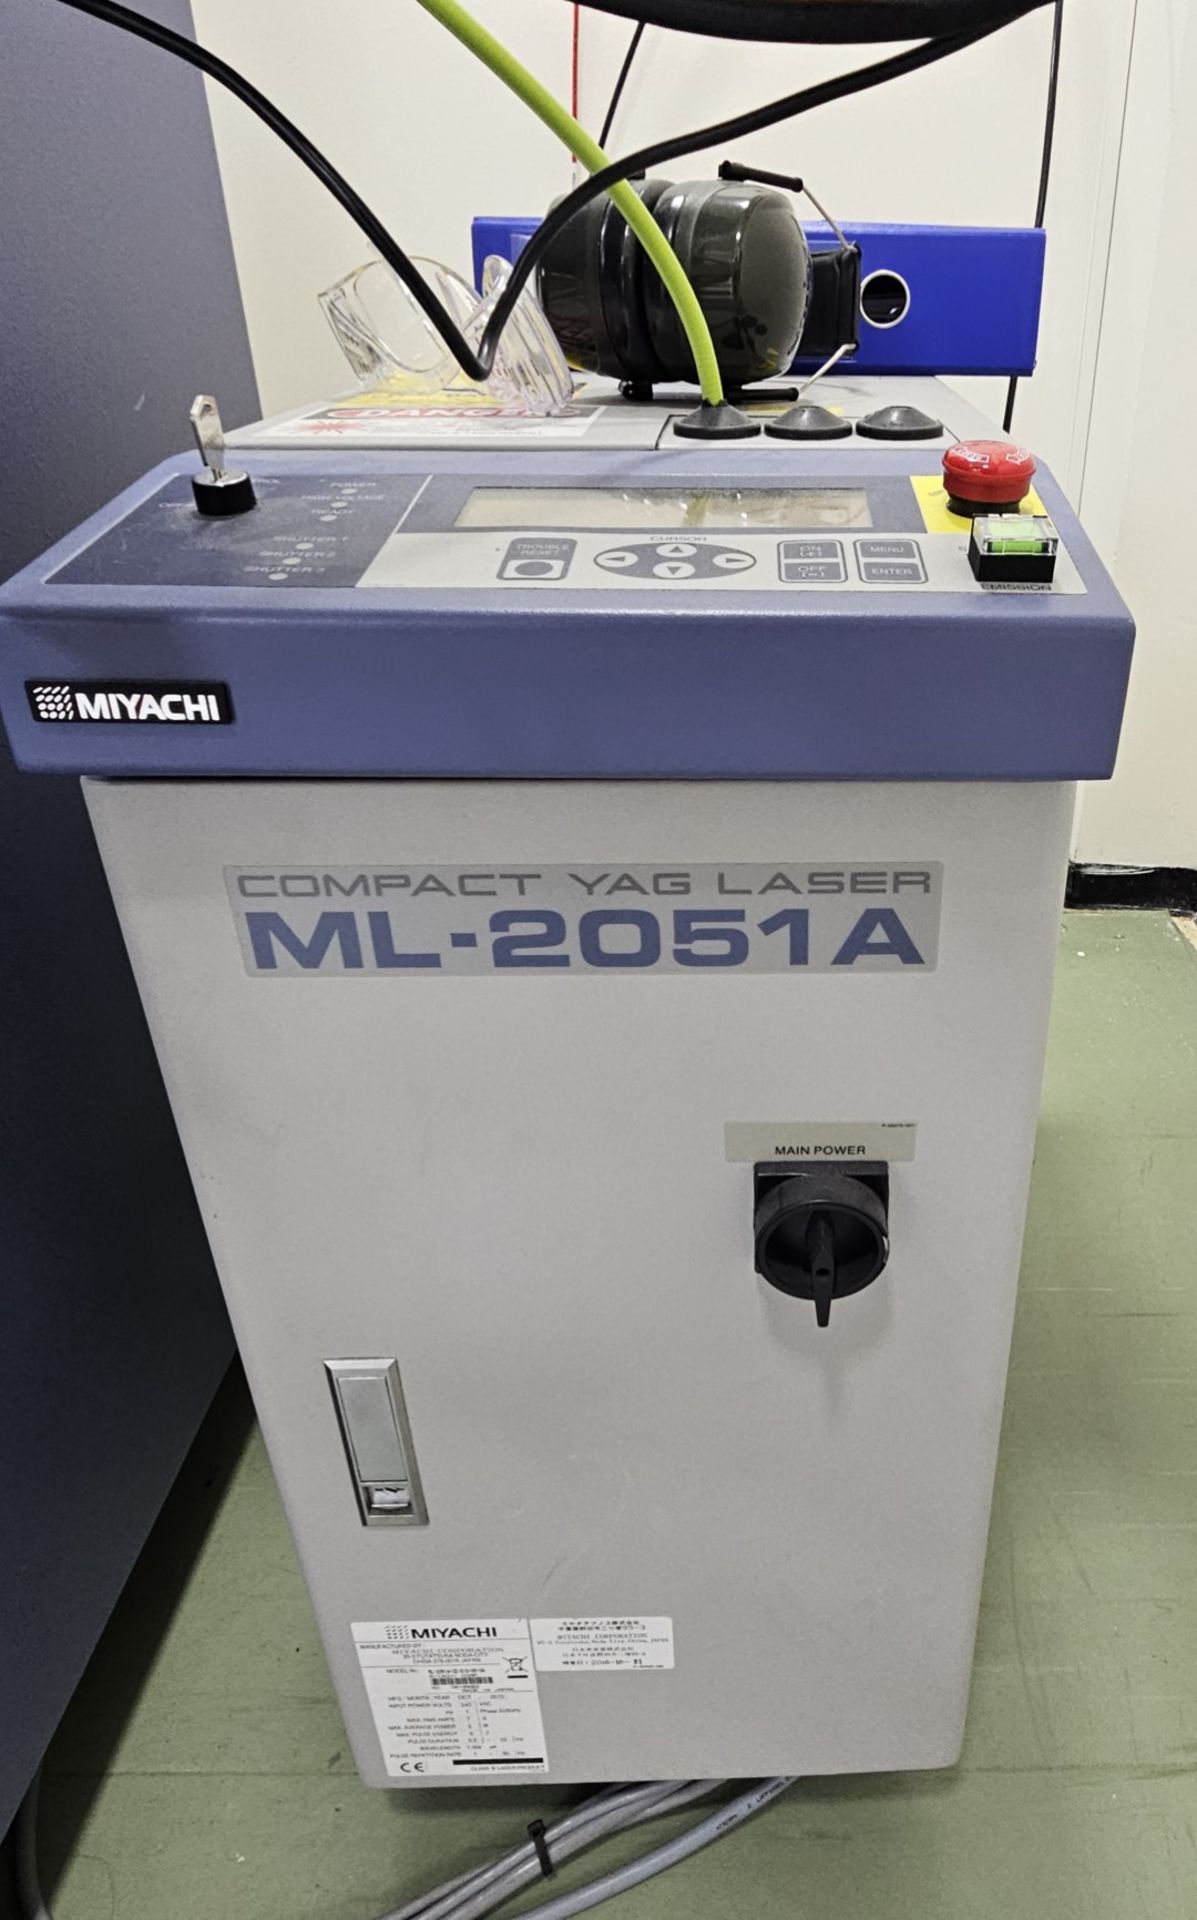 1 x Amada Miyachi Nova 6 Laser CNC Welding Workstation System With ML-2051A Compact Yag Laser - - Image 3 of 11